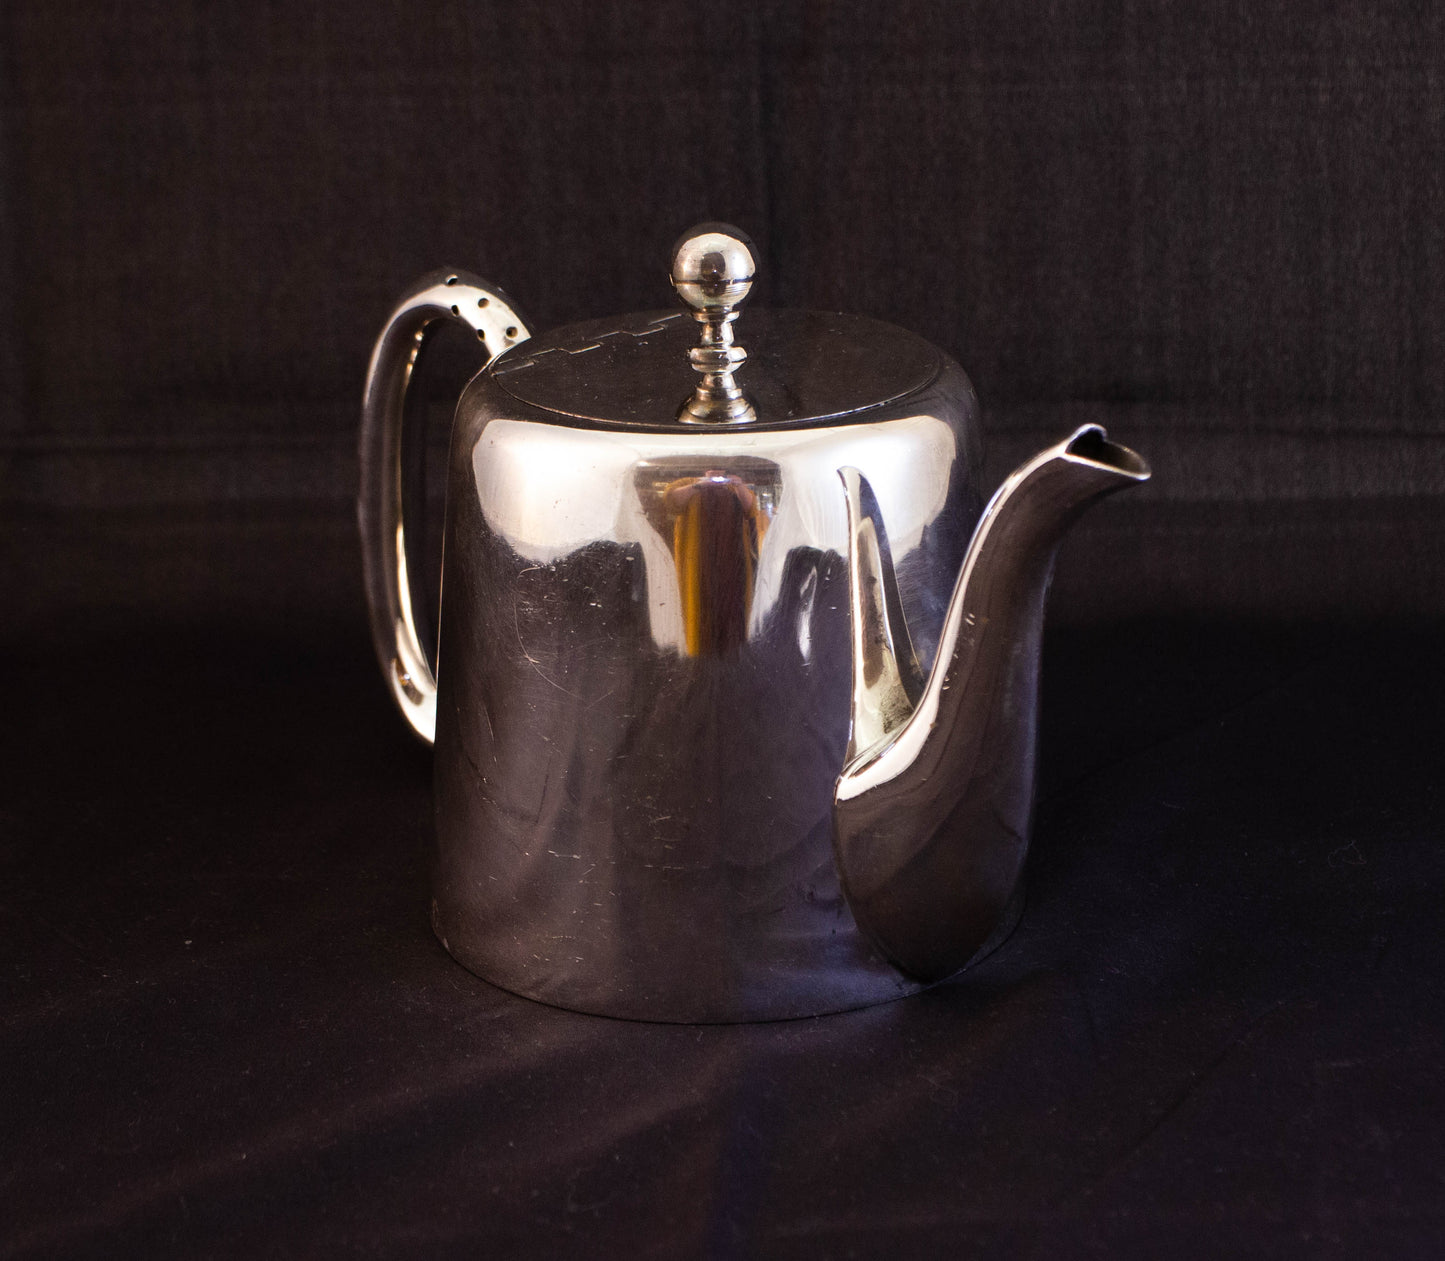 Hotelware Tea Pot